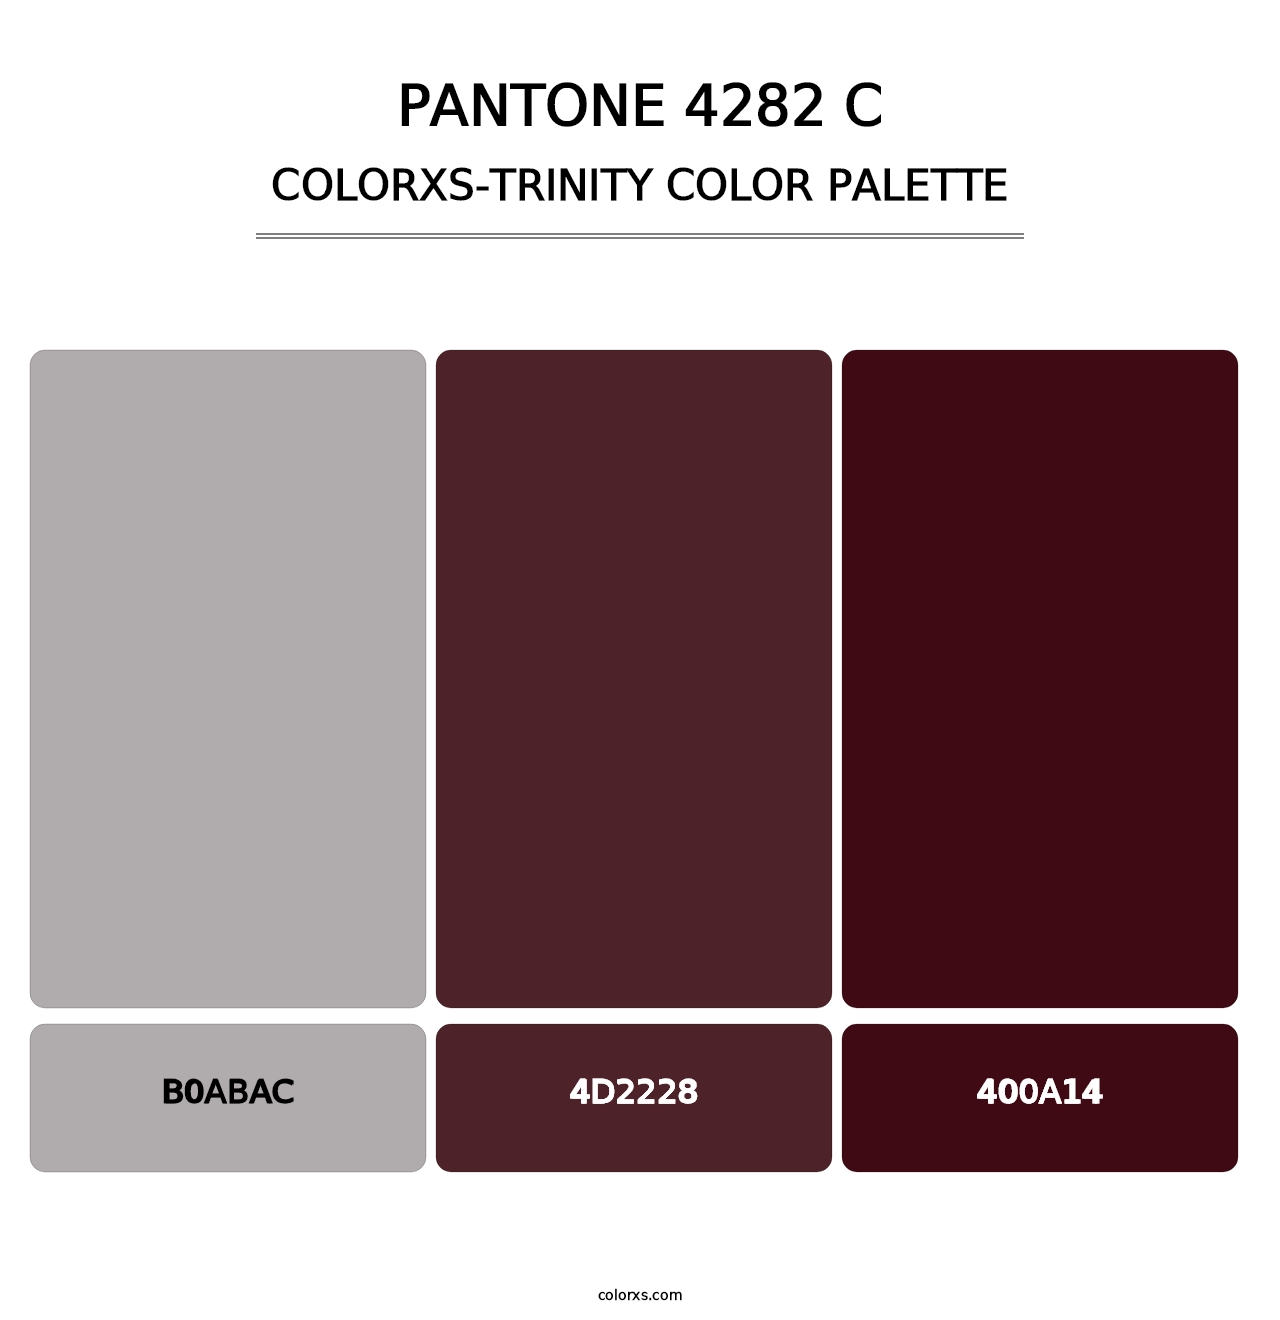 PANTONE 4282 C - Colorxs Trinity Palette